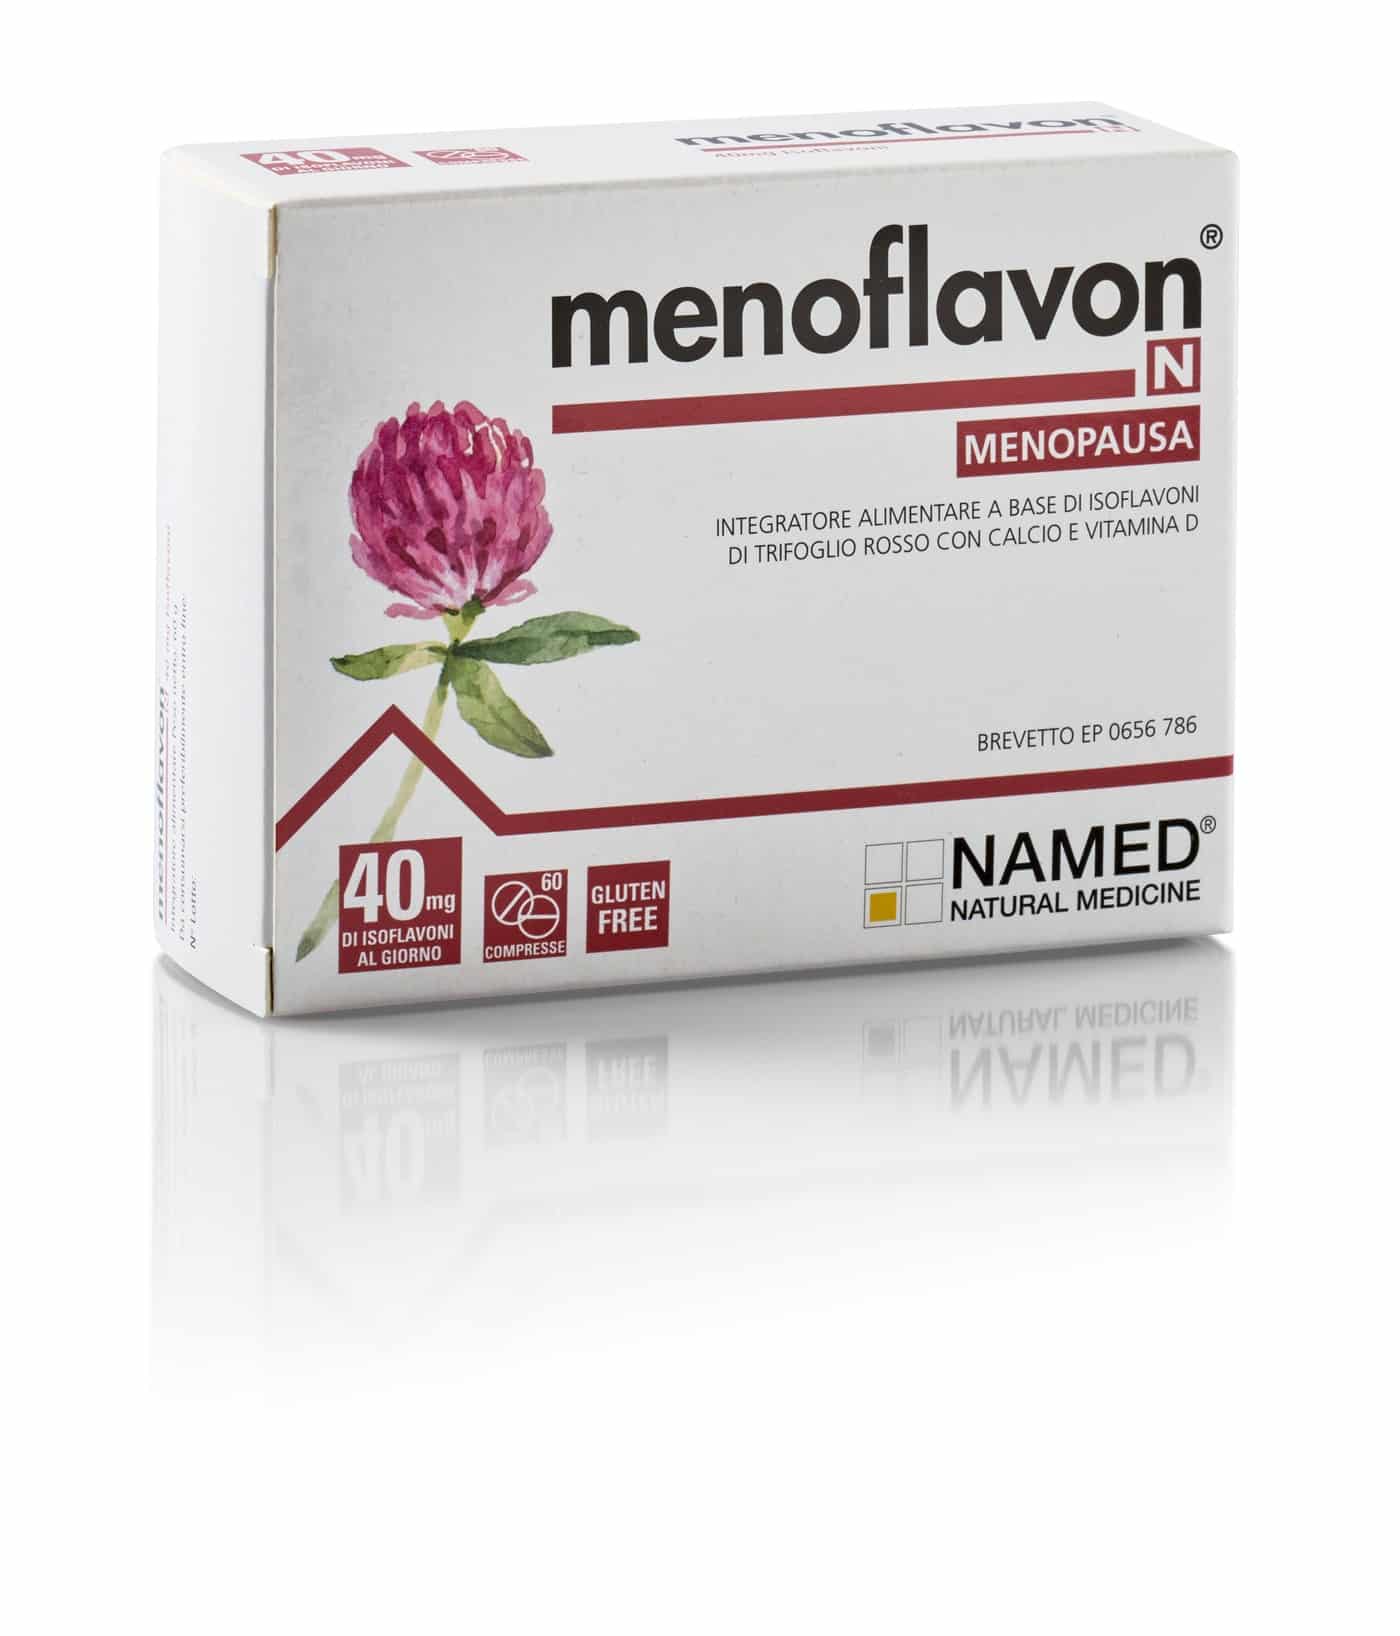 Menoflavon N menopausa